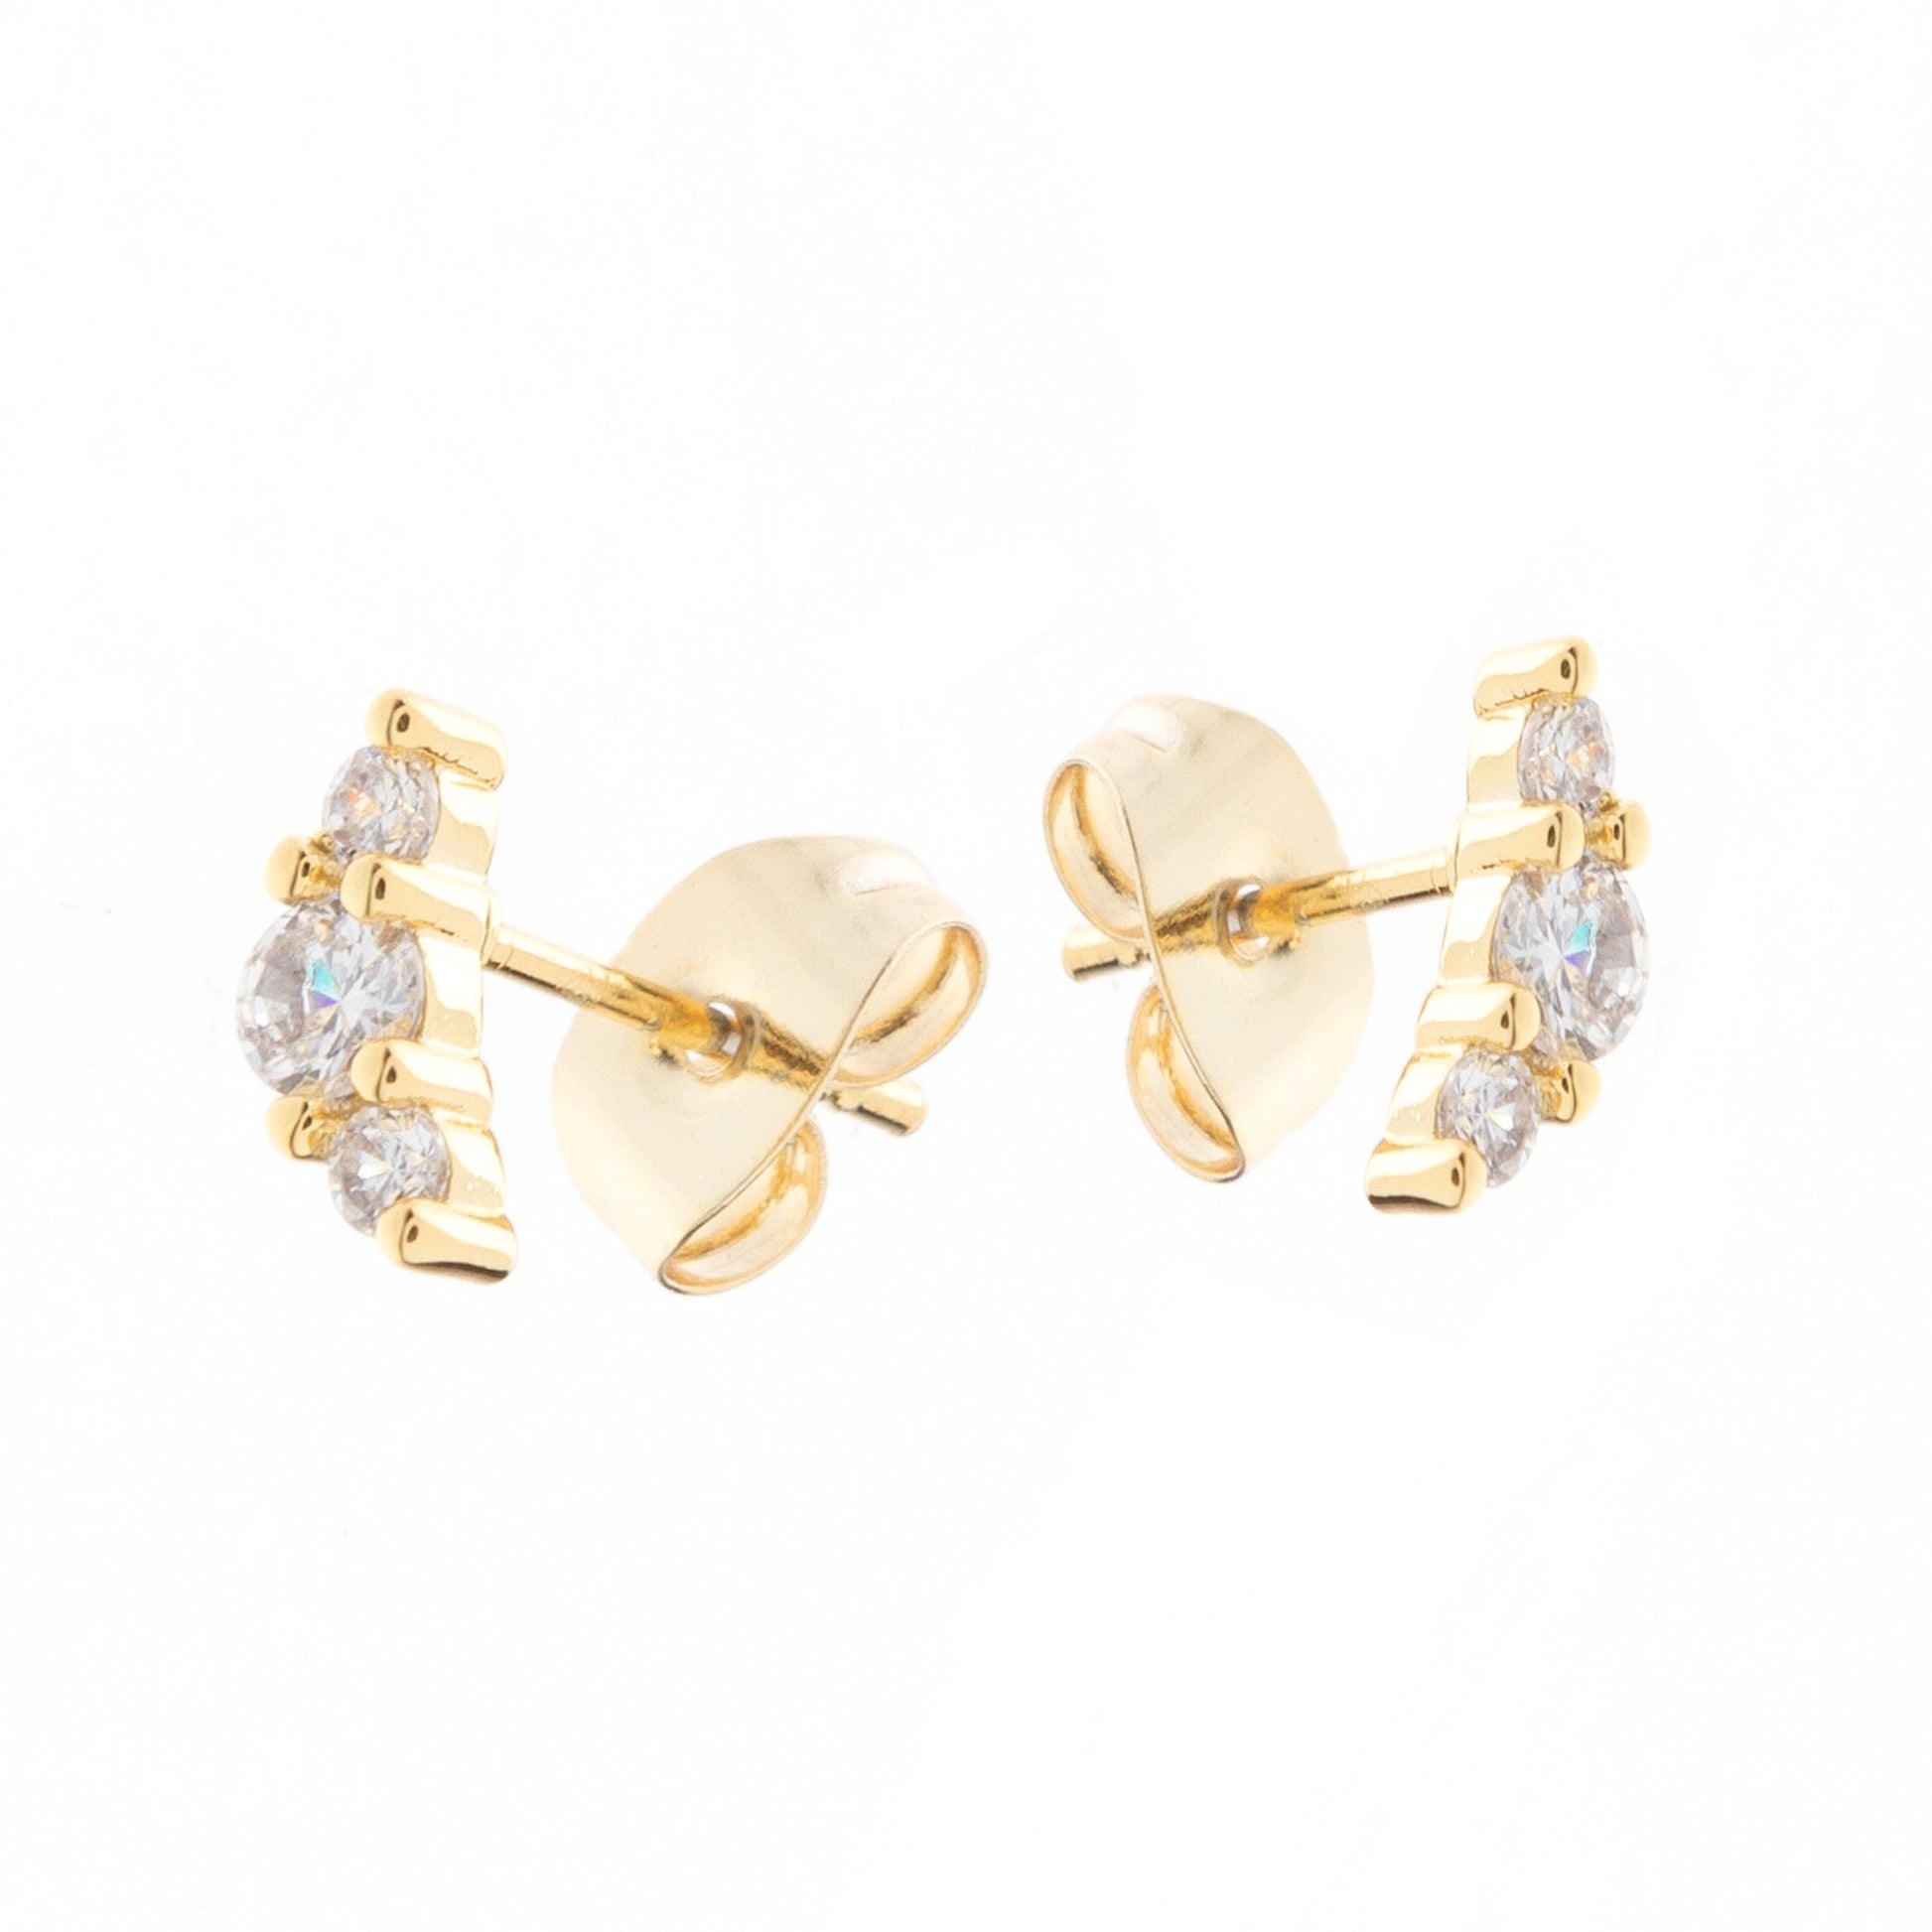 Curved gemstone gold stud earrings